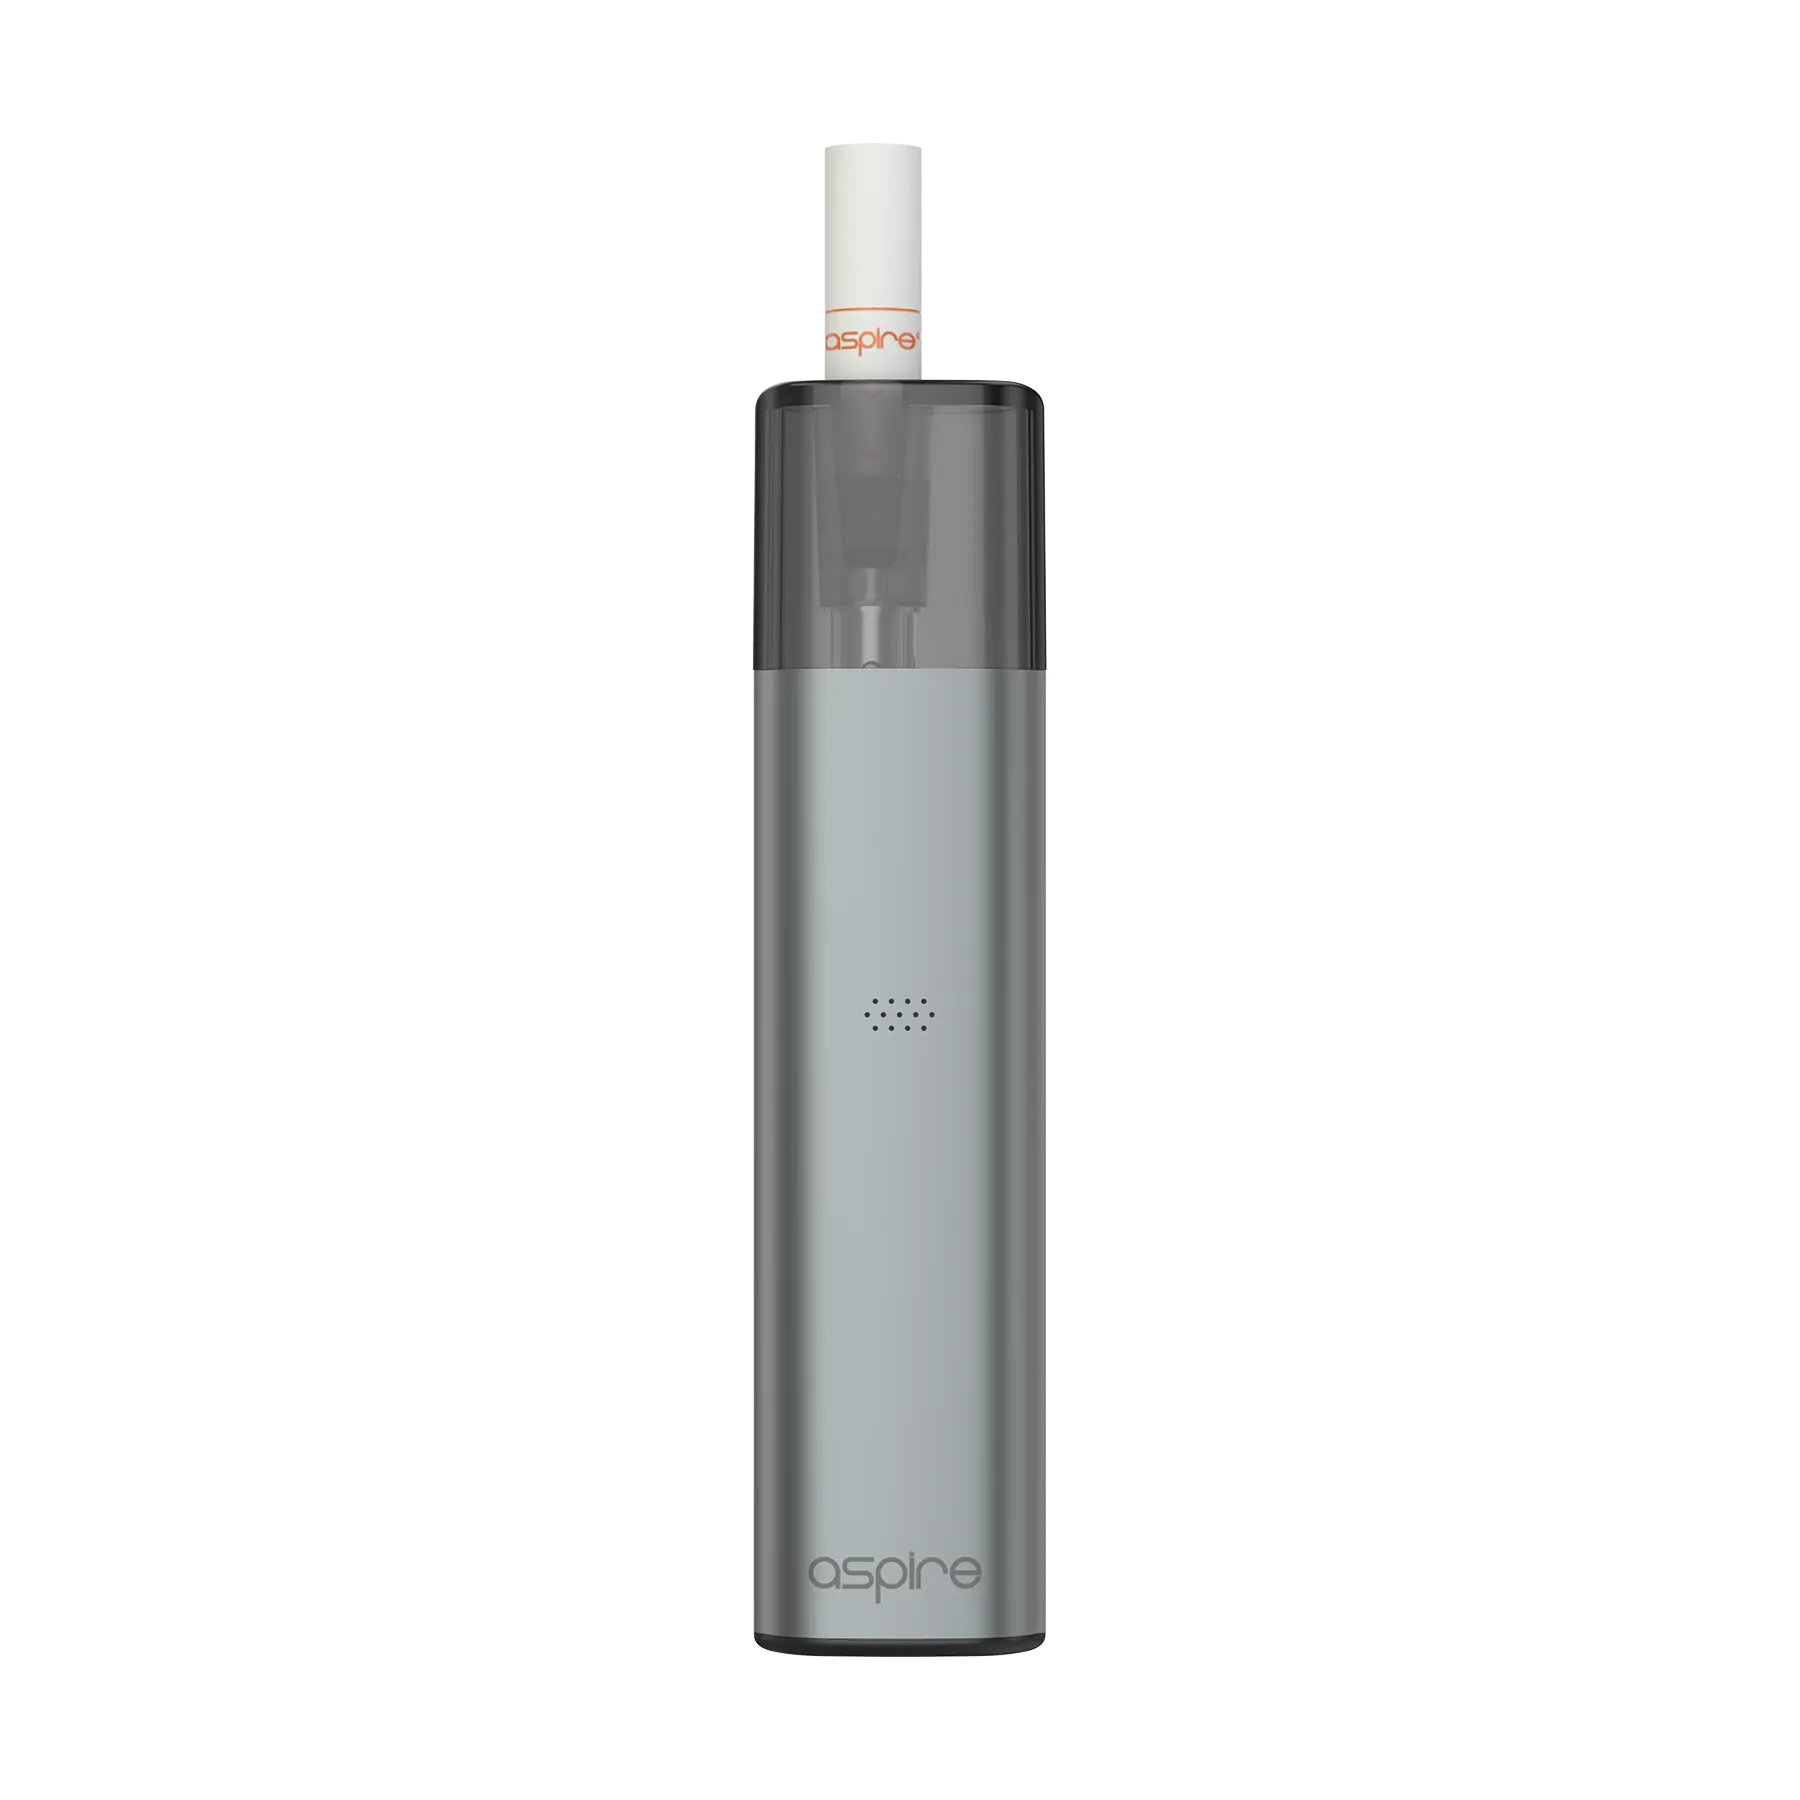 Aspire UK Vilter 450mAh E-Cigarette - Grey